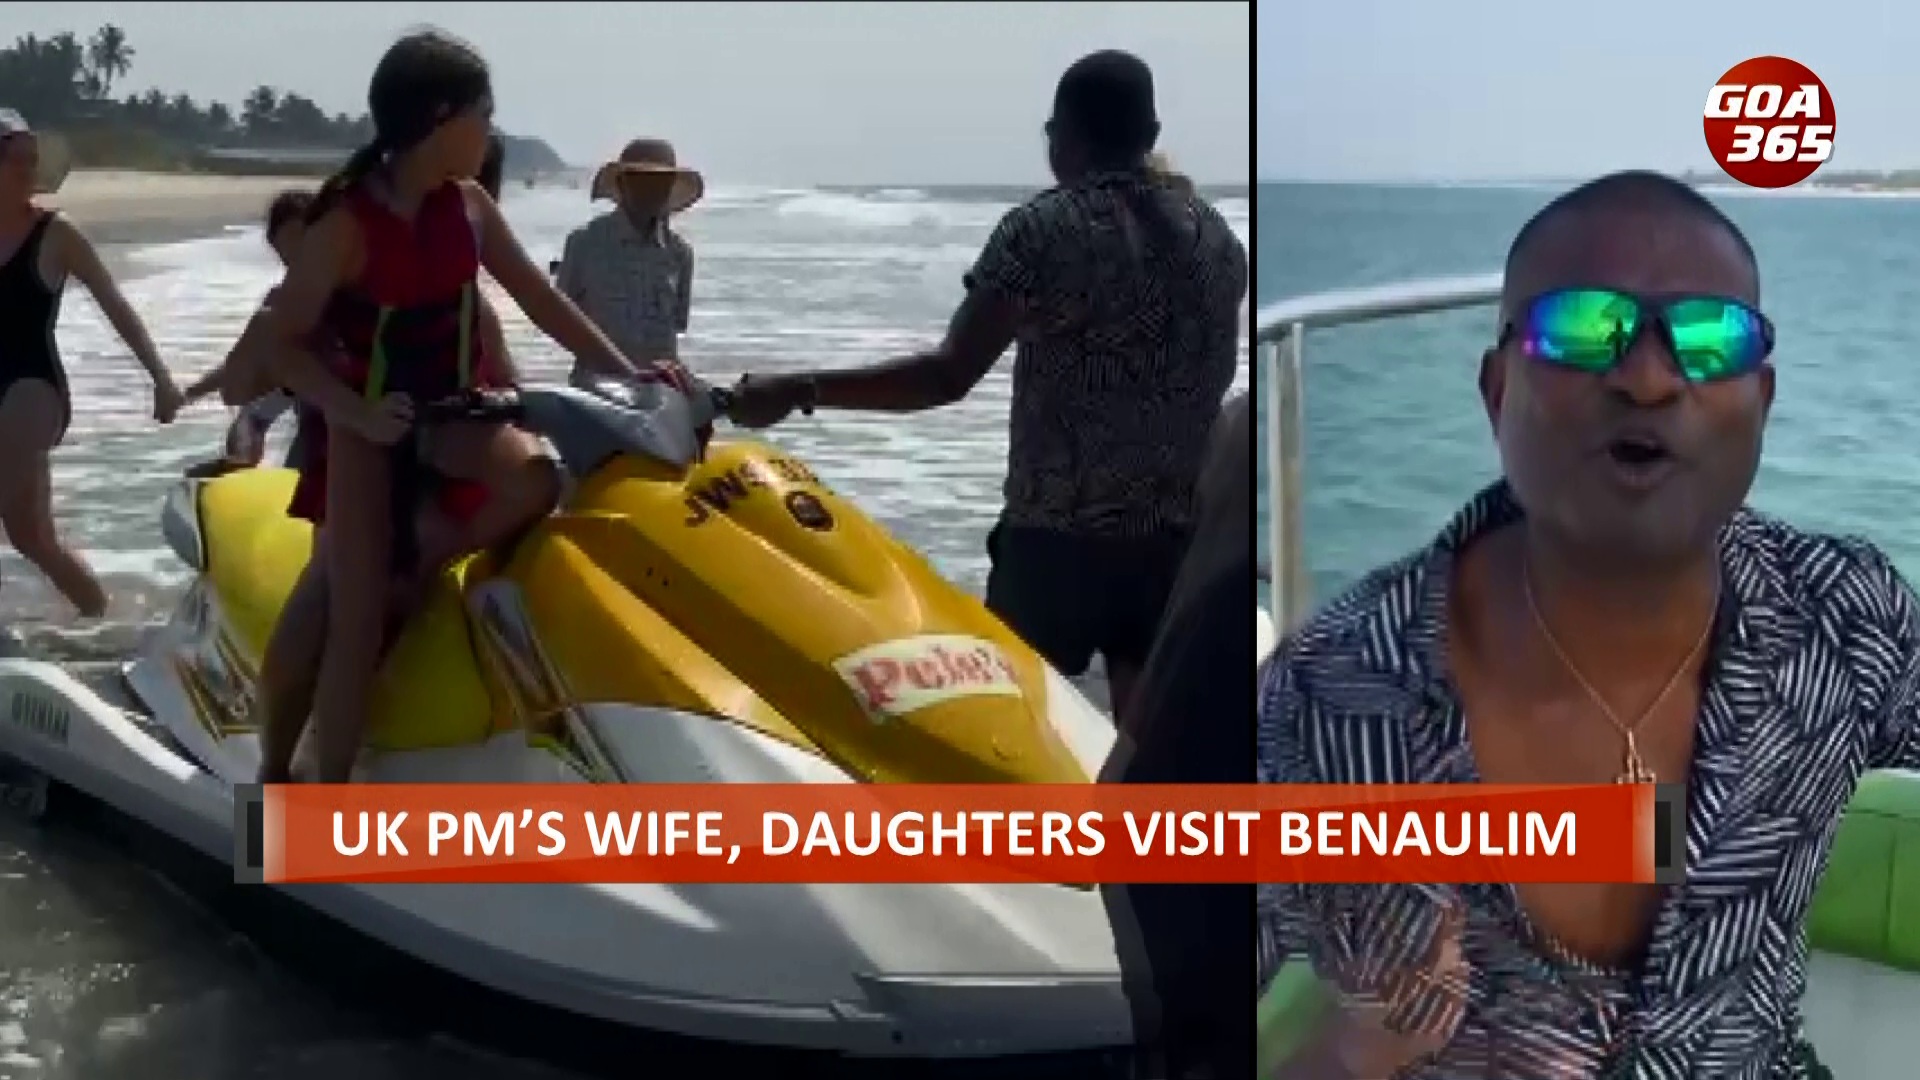 UK PM’s wife, daughters visit Benaulim beach, interact with Pele || ENGLISH || GOA365